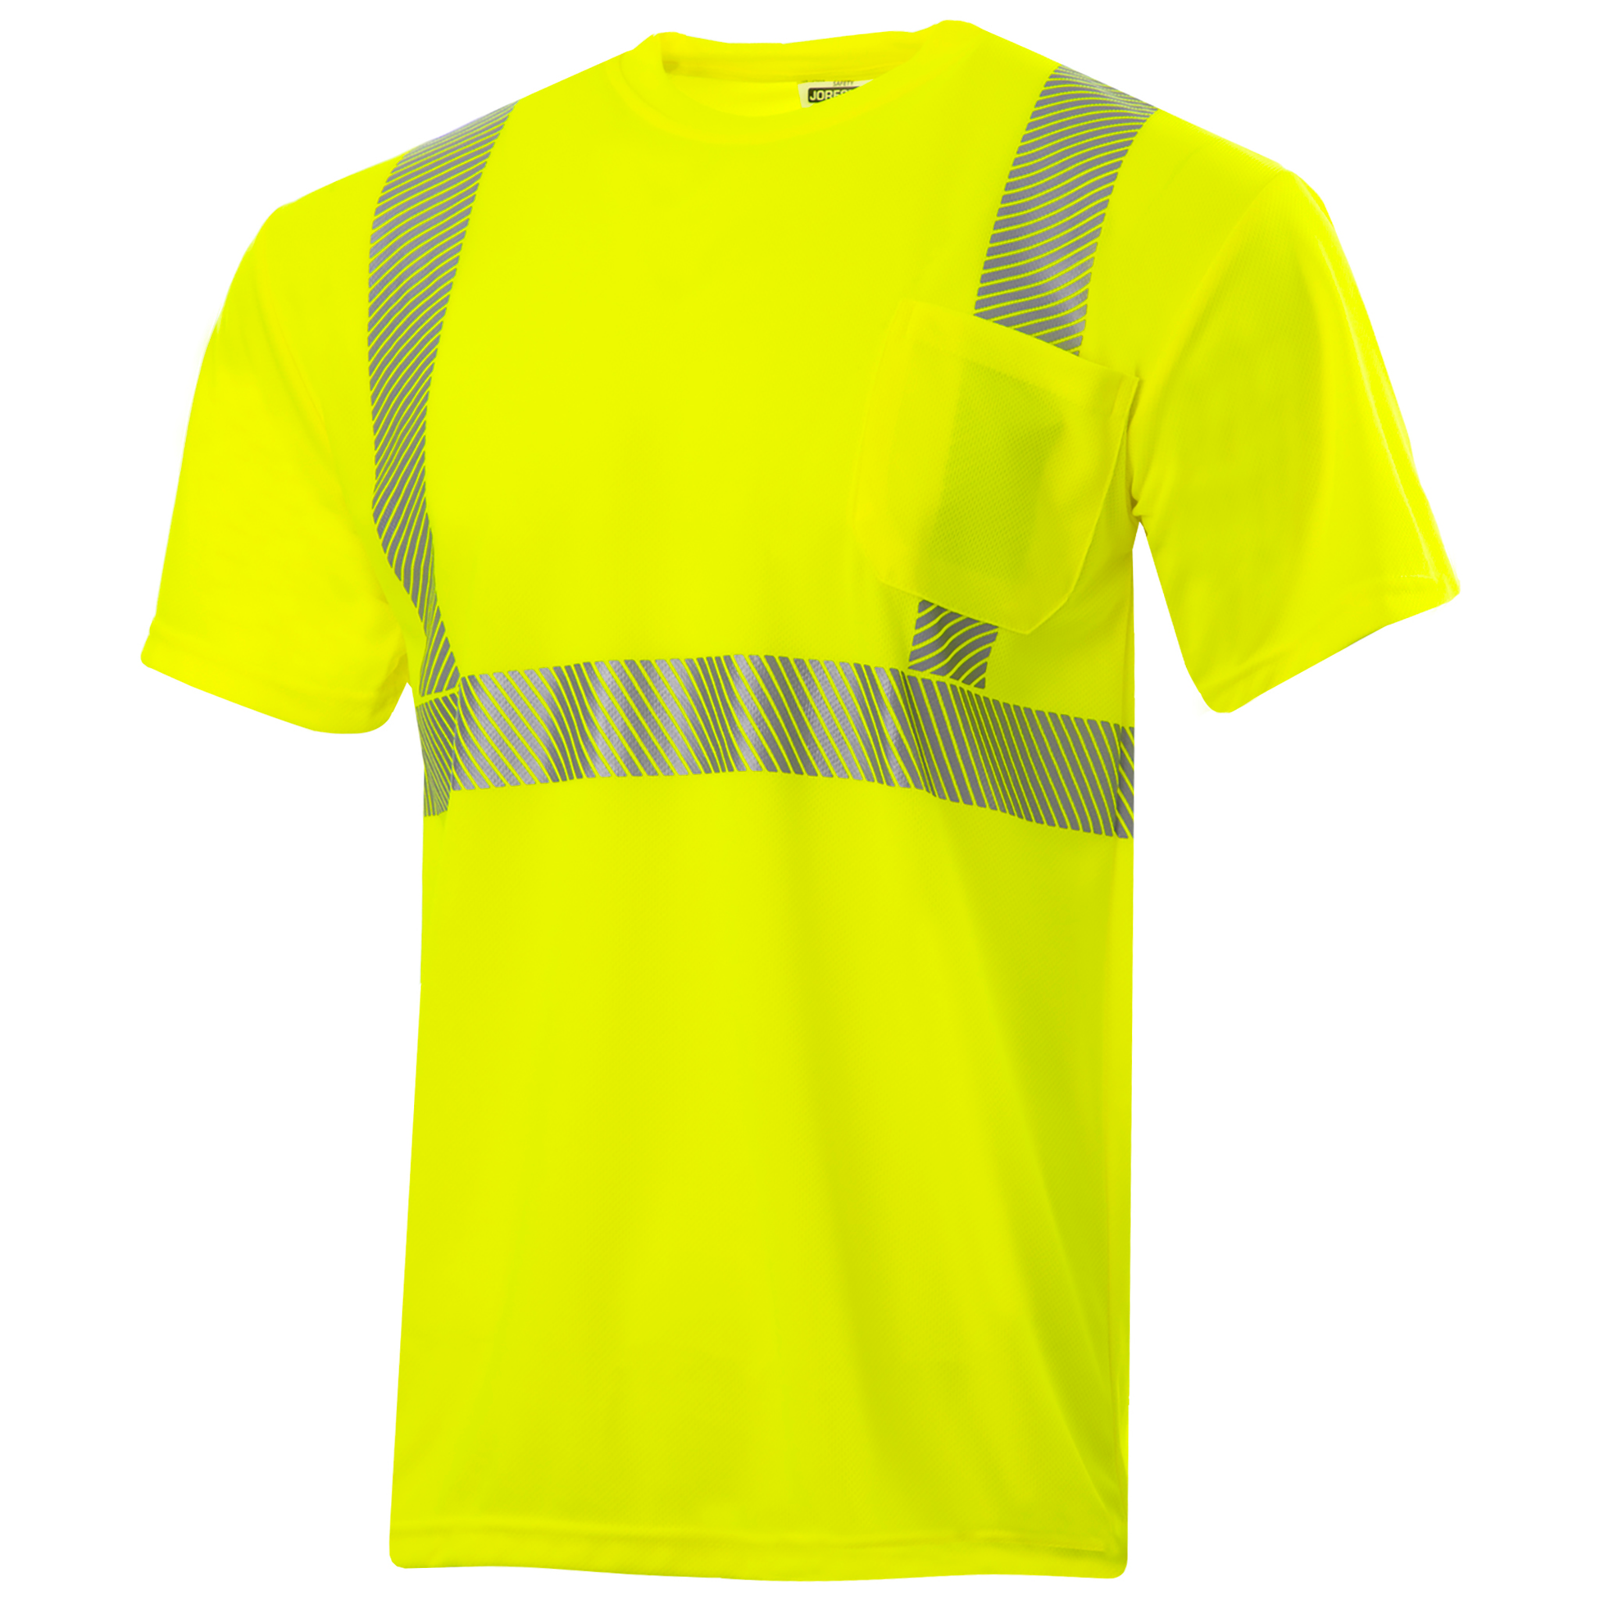 Heat Transfer Reflective High Visibility Safety Shirt